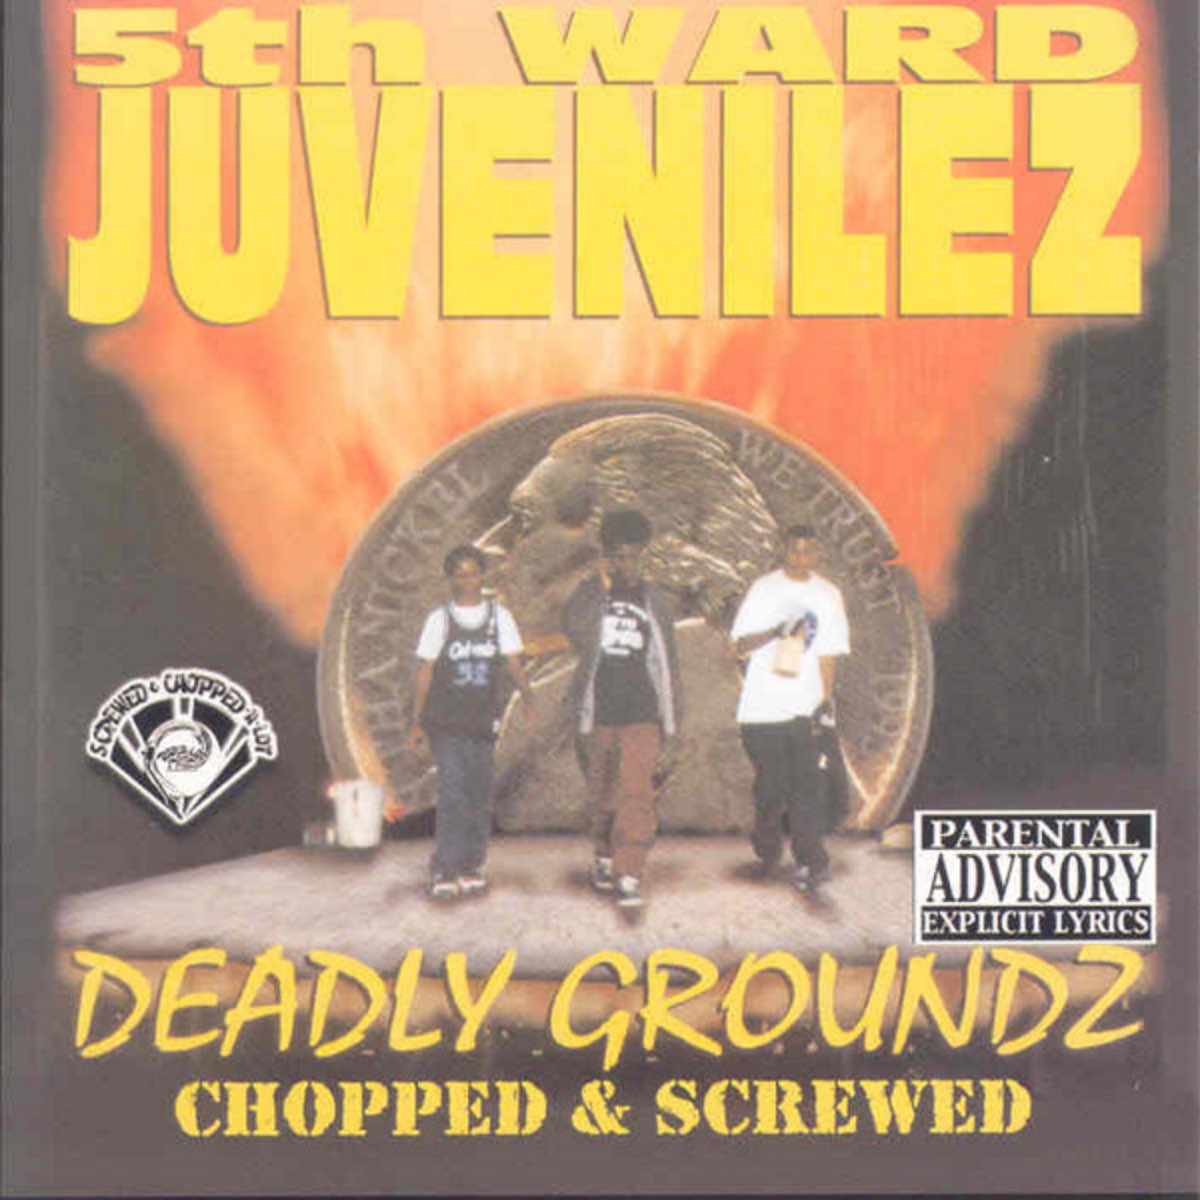 Deadly Groundz (Screwed) - 5th Ward Juvenilezのアルバム - Apple Music